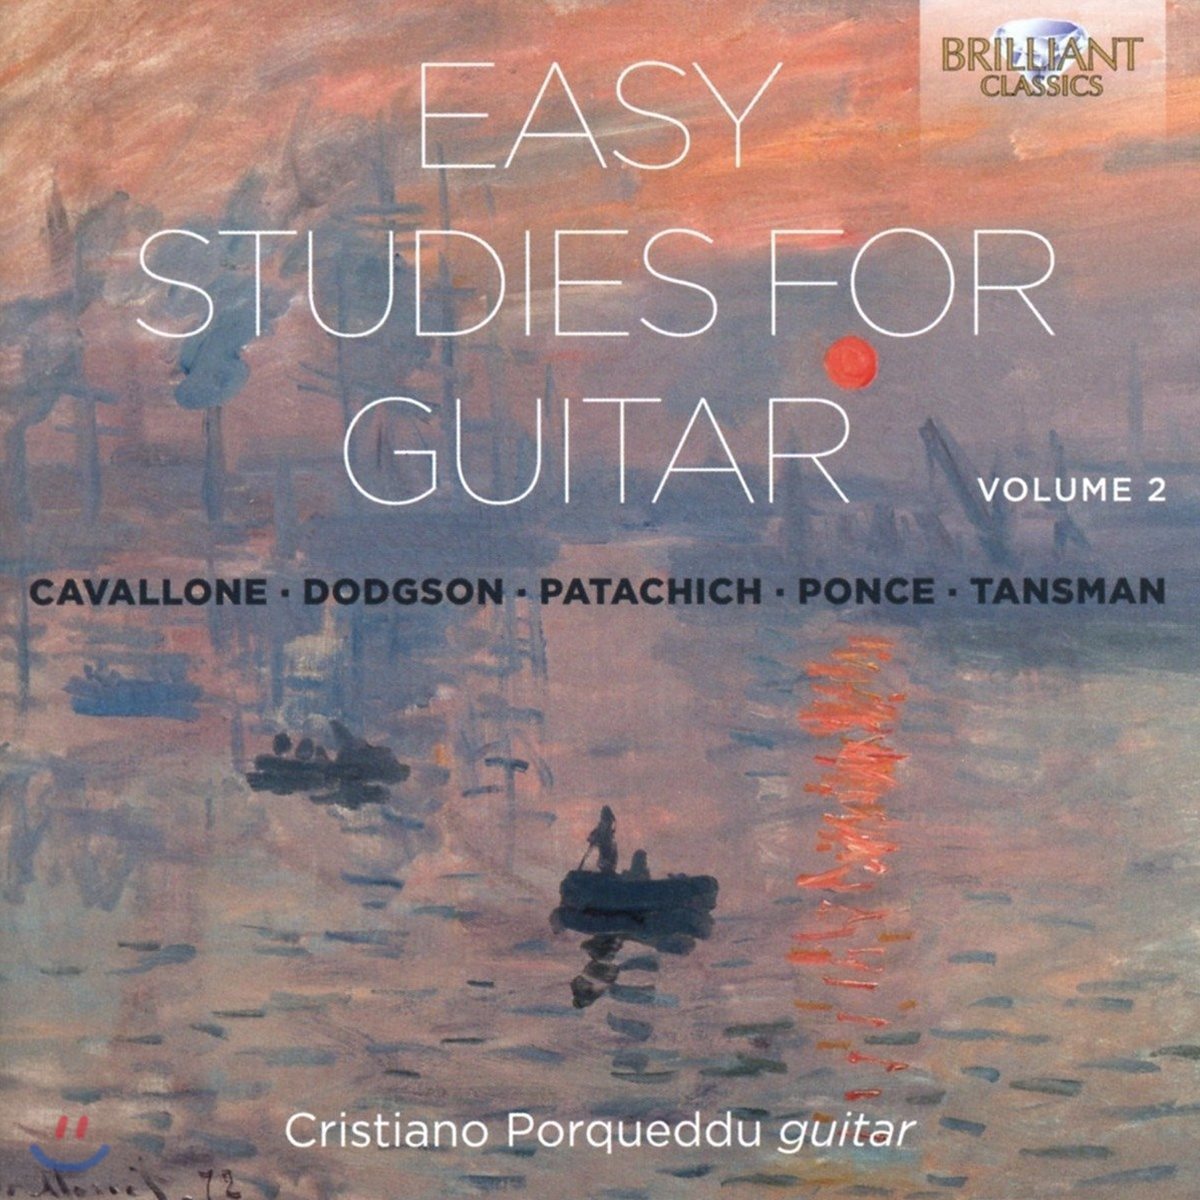 Cristiano Porqueddu 기타를 위한 쉬운 연습곡 2집 - 카발로네 / 퐁세 / 탄스만 (Easy Studies for Guitar Volume 2)